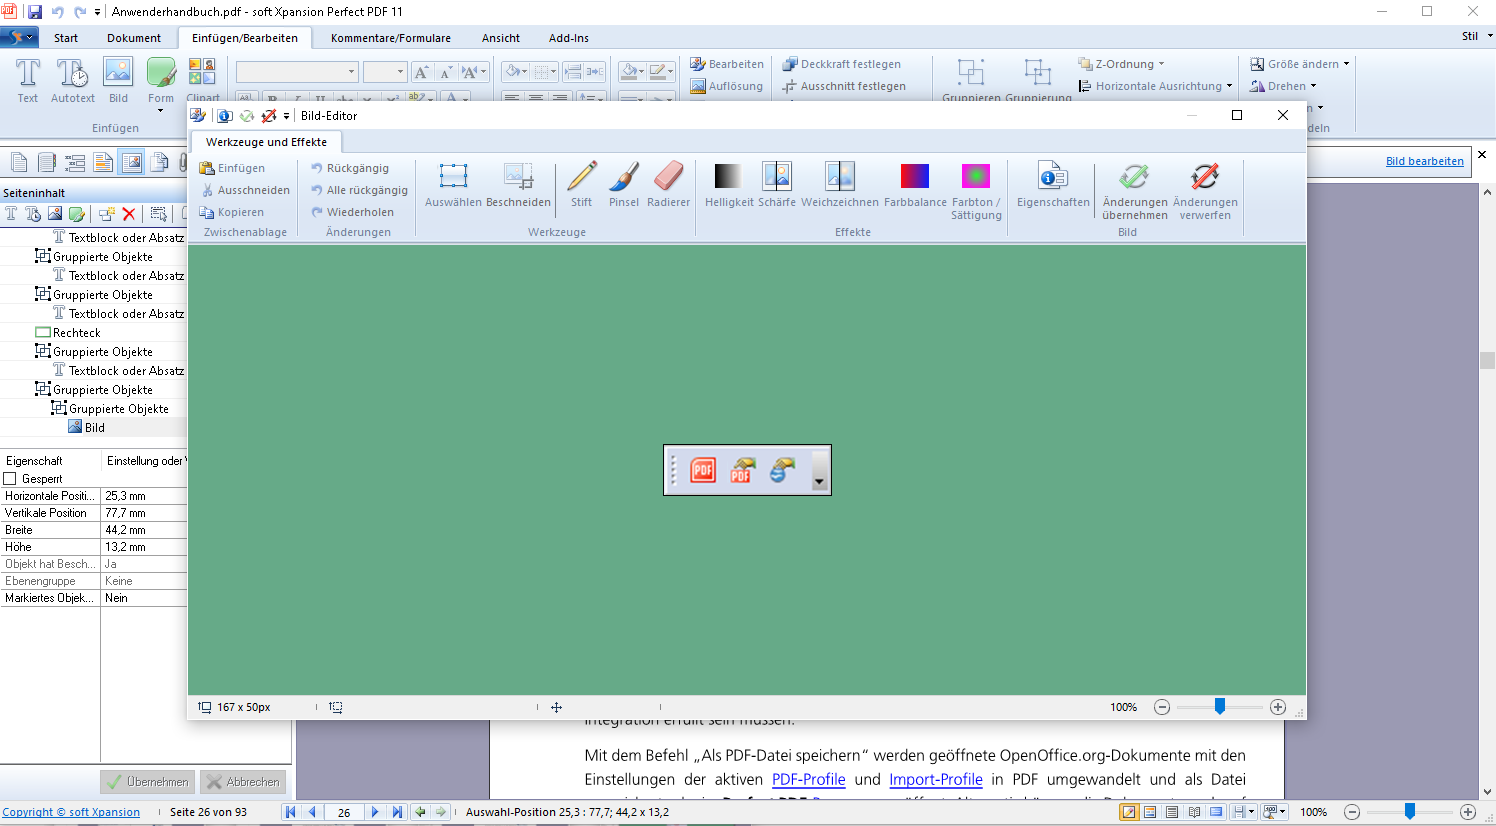 Perfect PDF 11 Premium - with image editor in PDF files